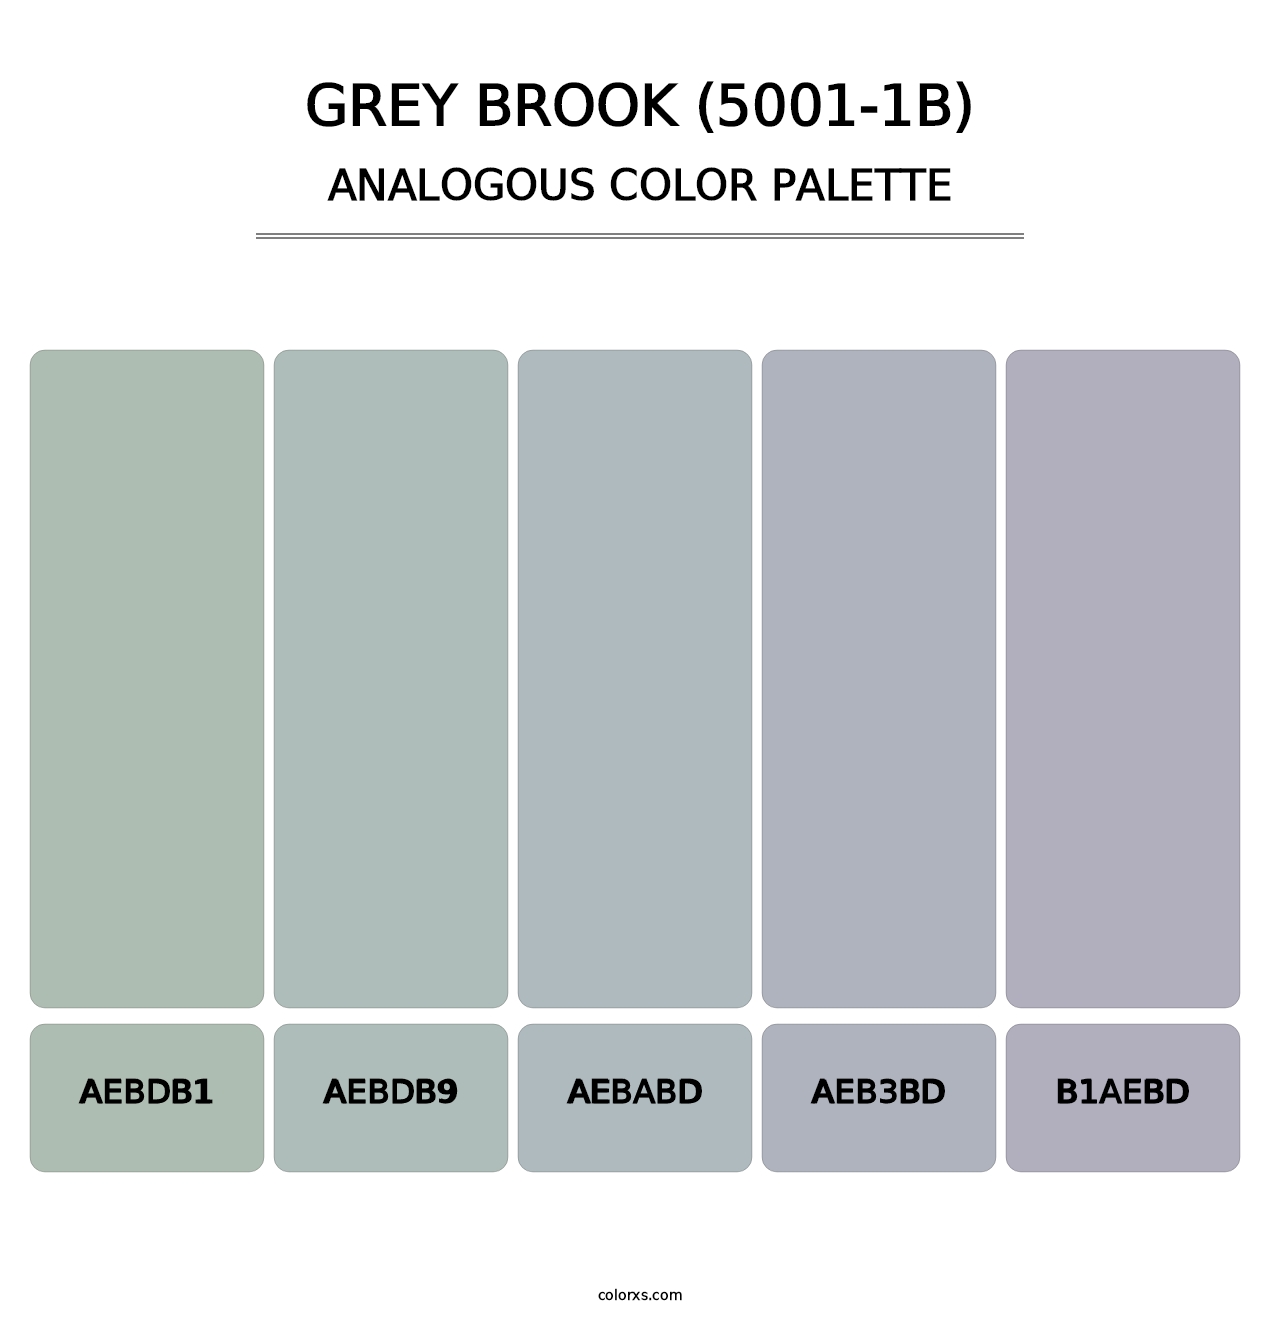 Grey Brook (5001-1B) - Analogous Color Palette